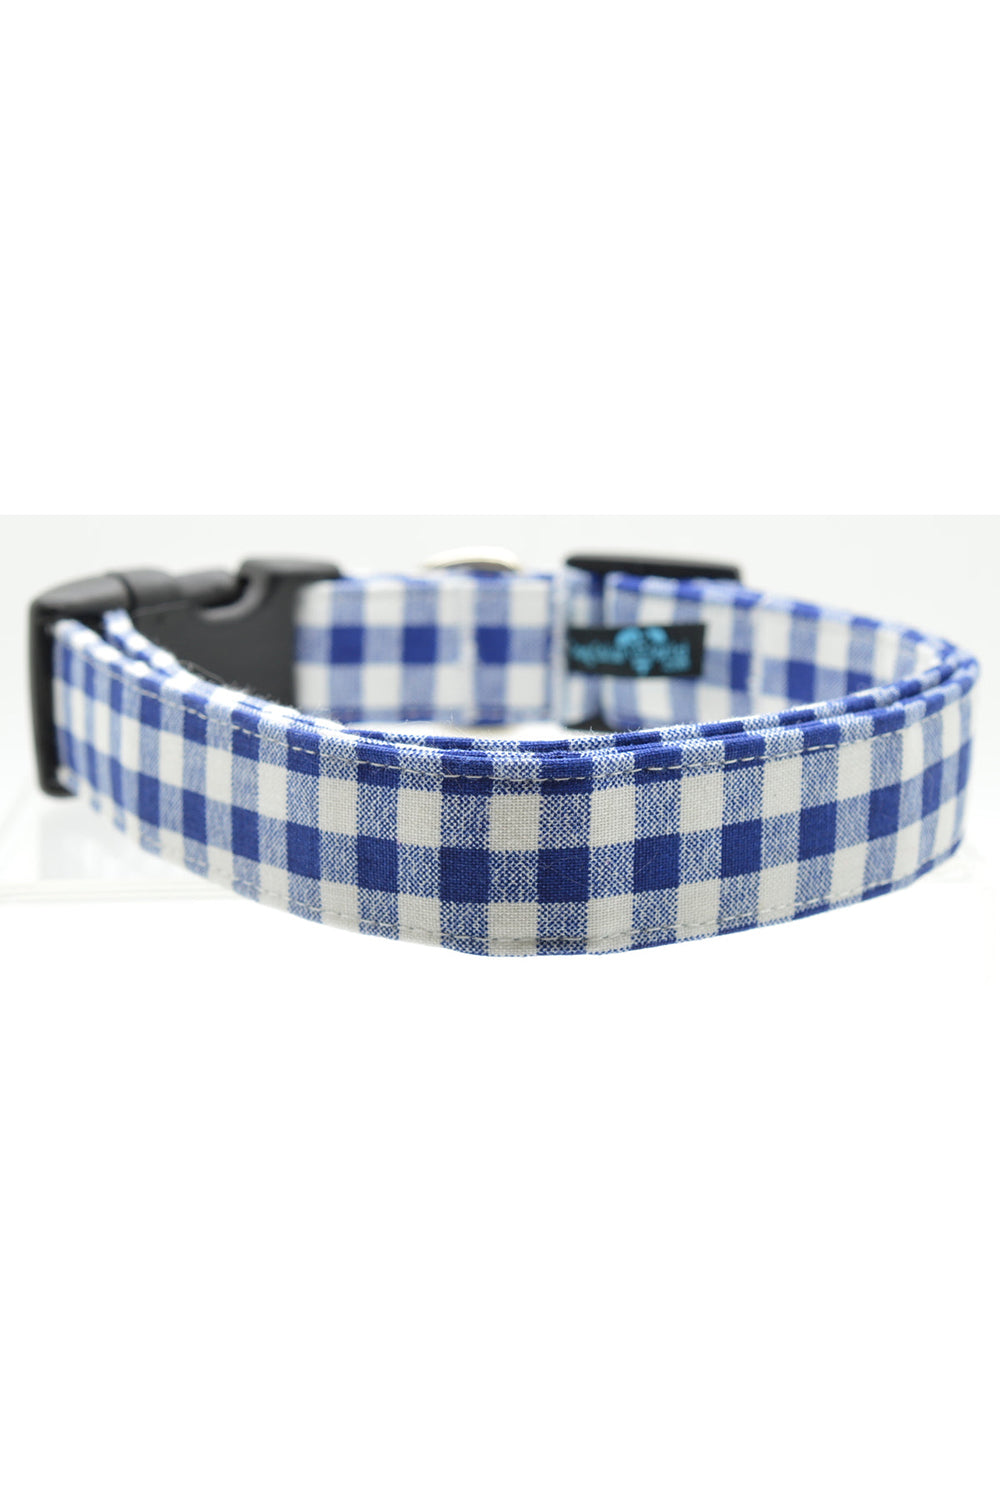 Fun Dog Collar - Blue Gingham